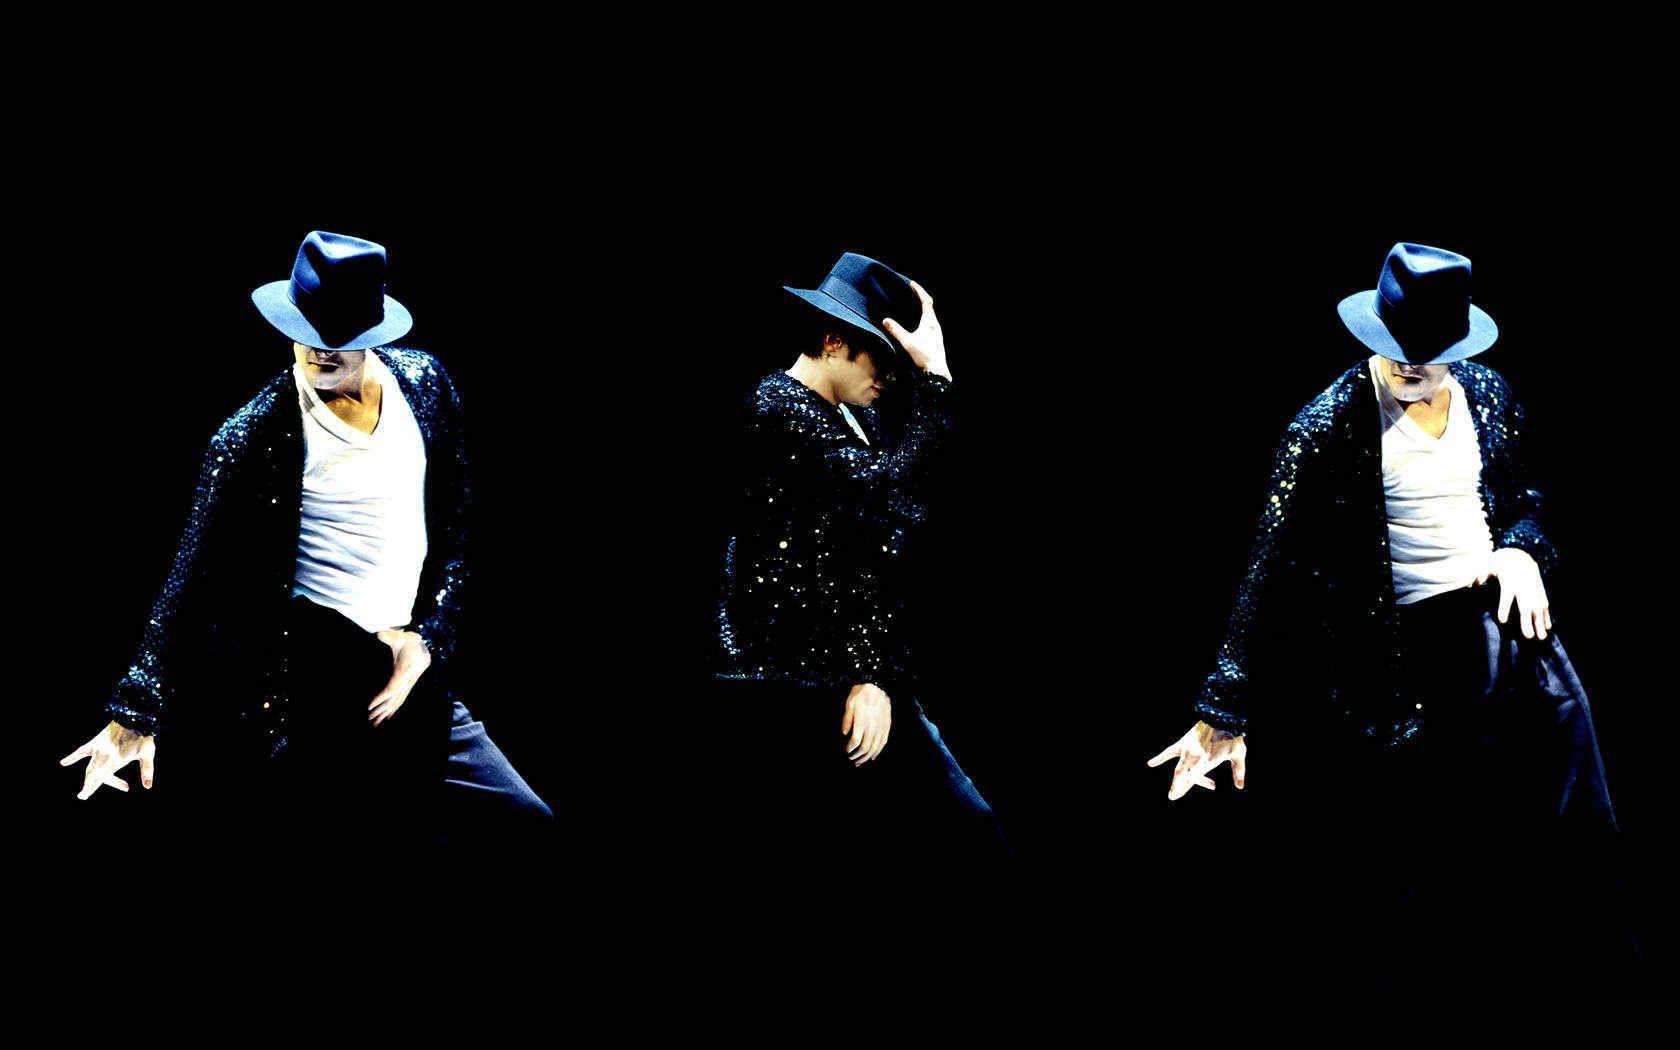 Michael Jackson Wallpaper Wallpaper Full HD 1080p, High